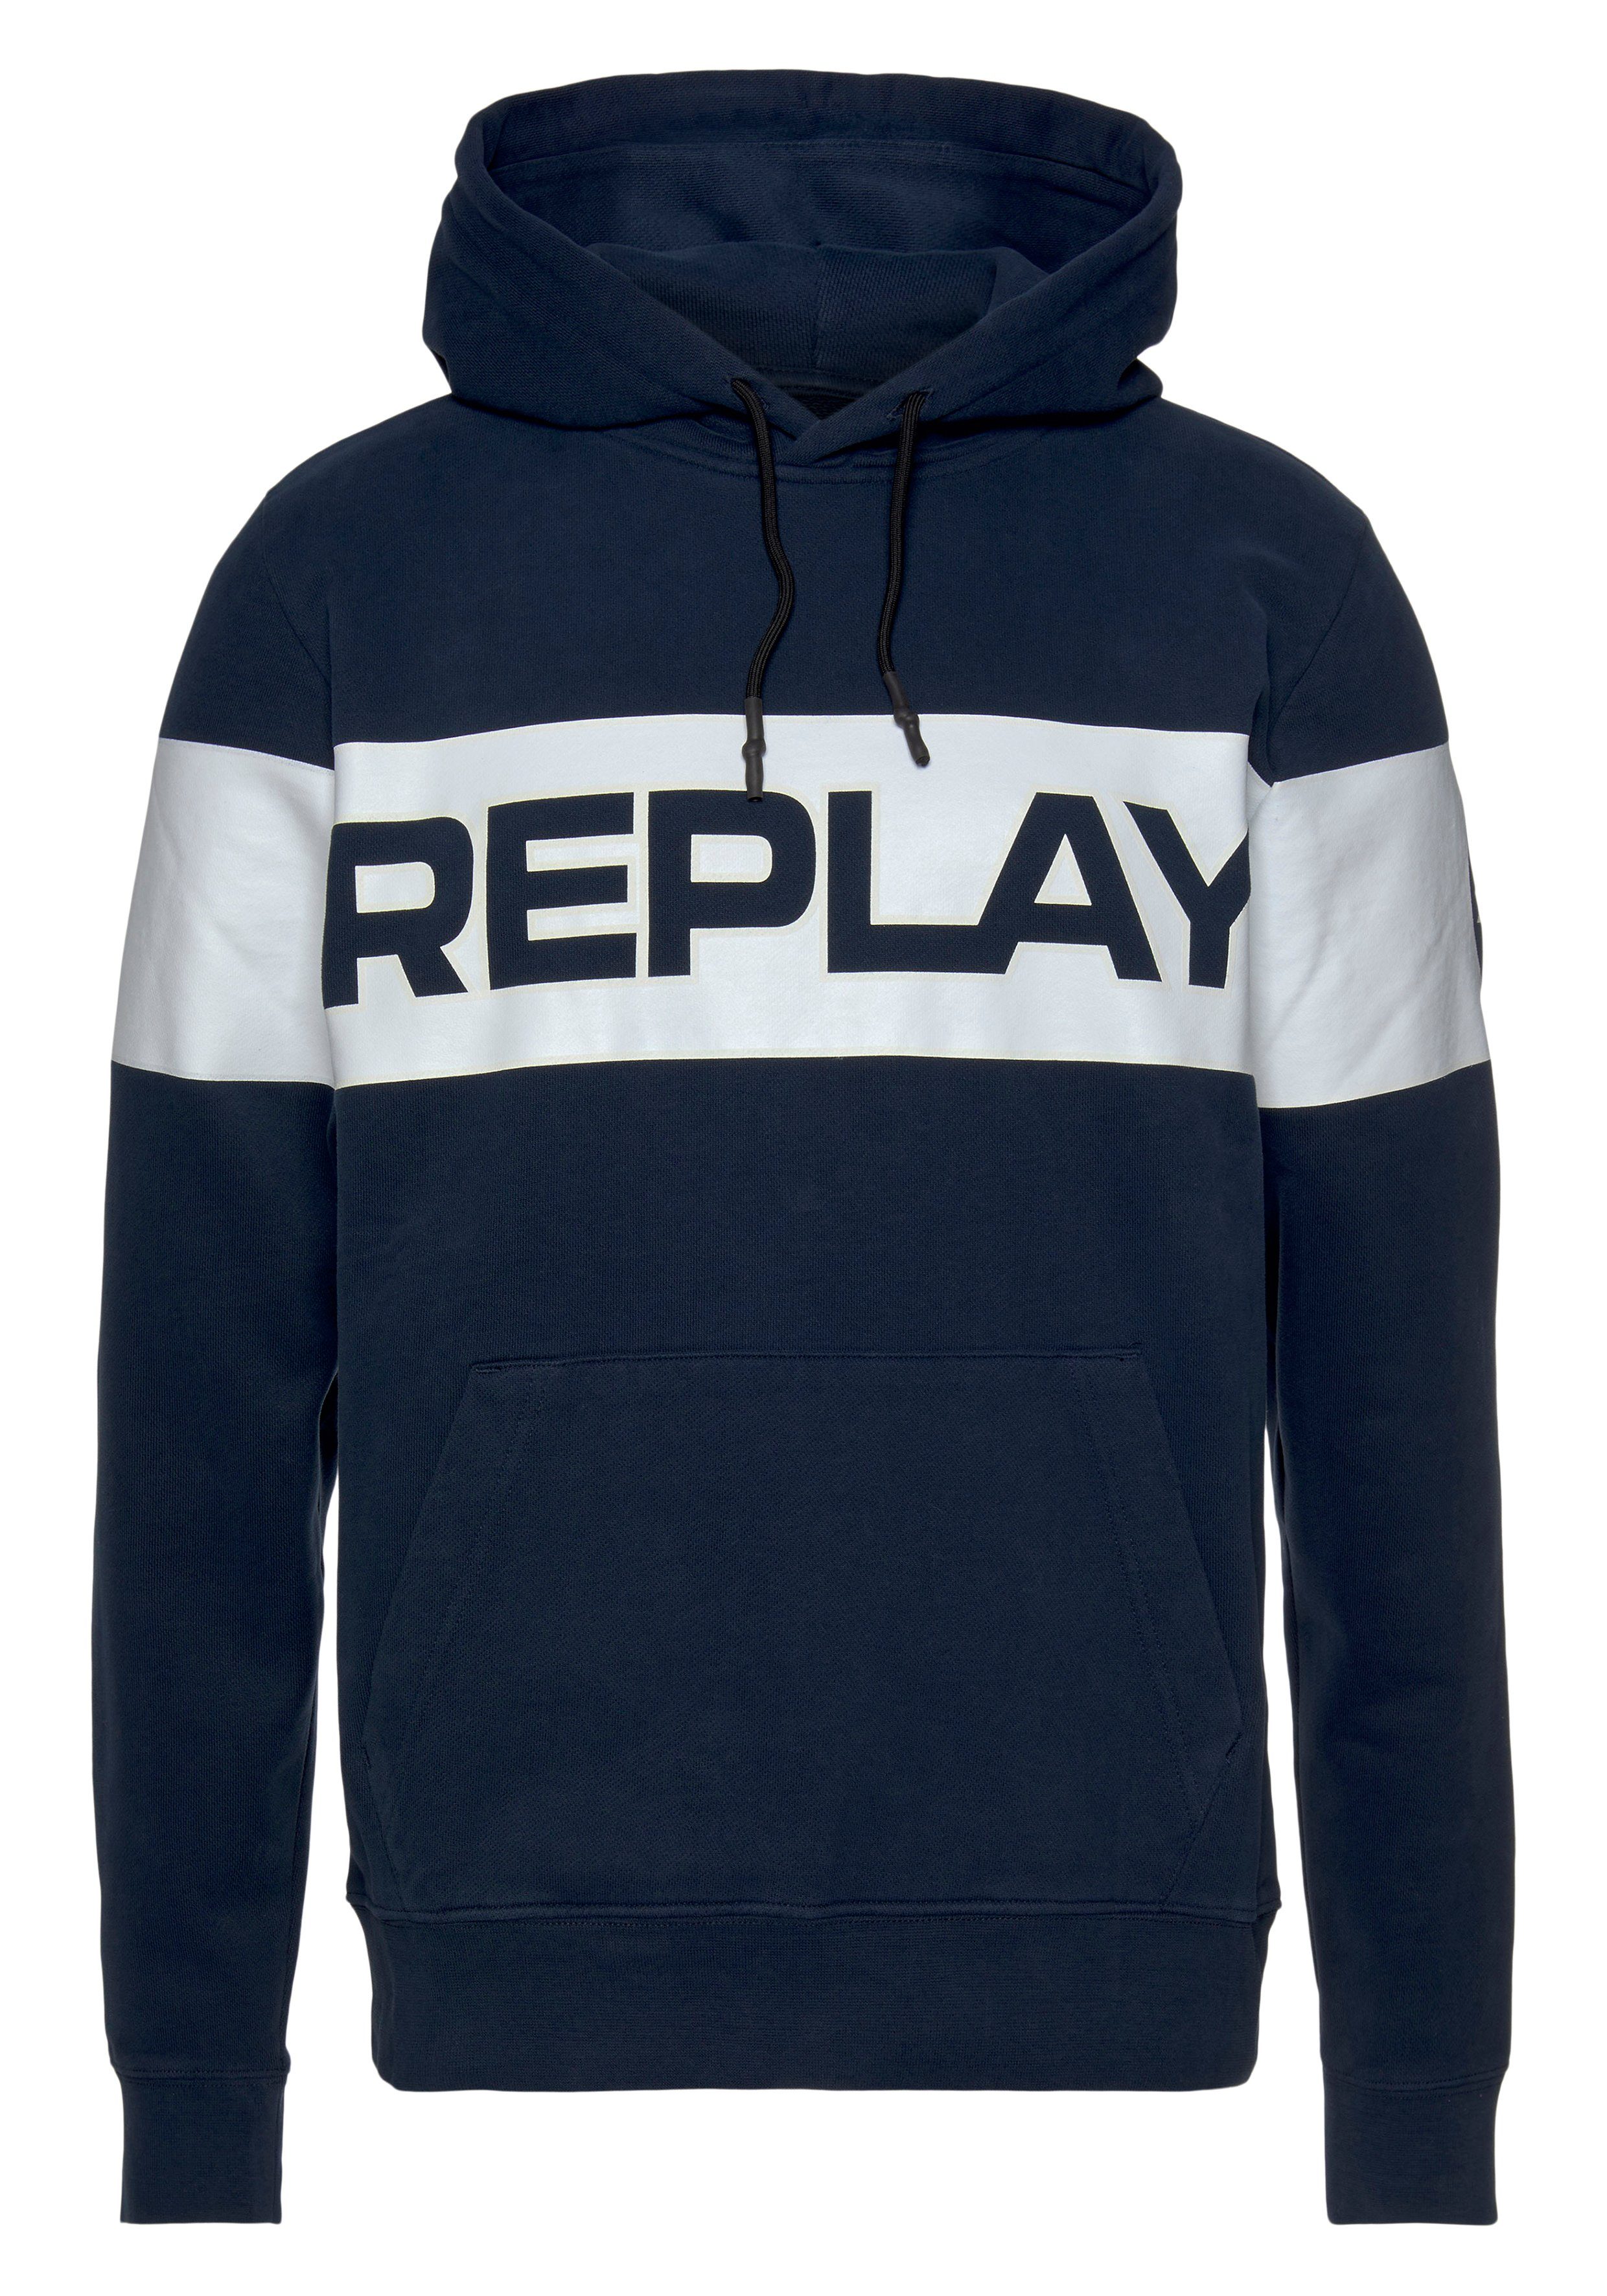 Replay Kapuzensweatshirt mit großem Markenprint navy